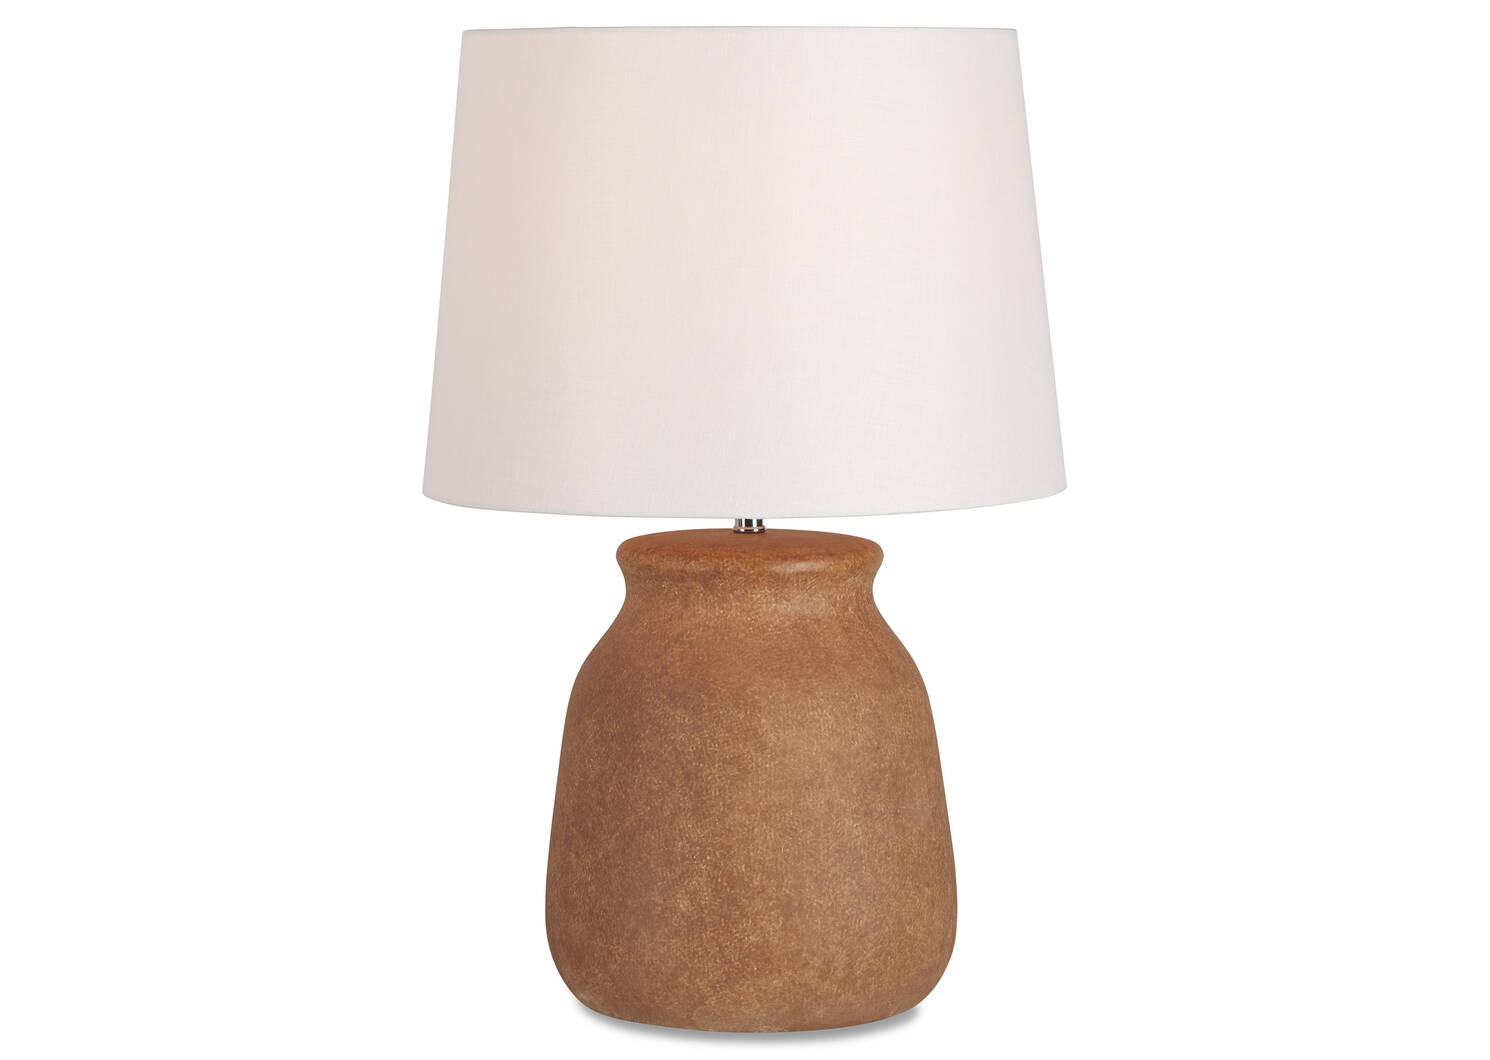 Ryth Table Lamp